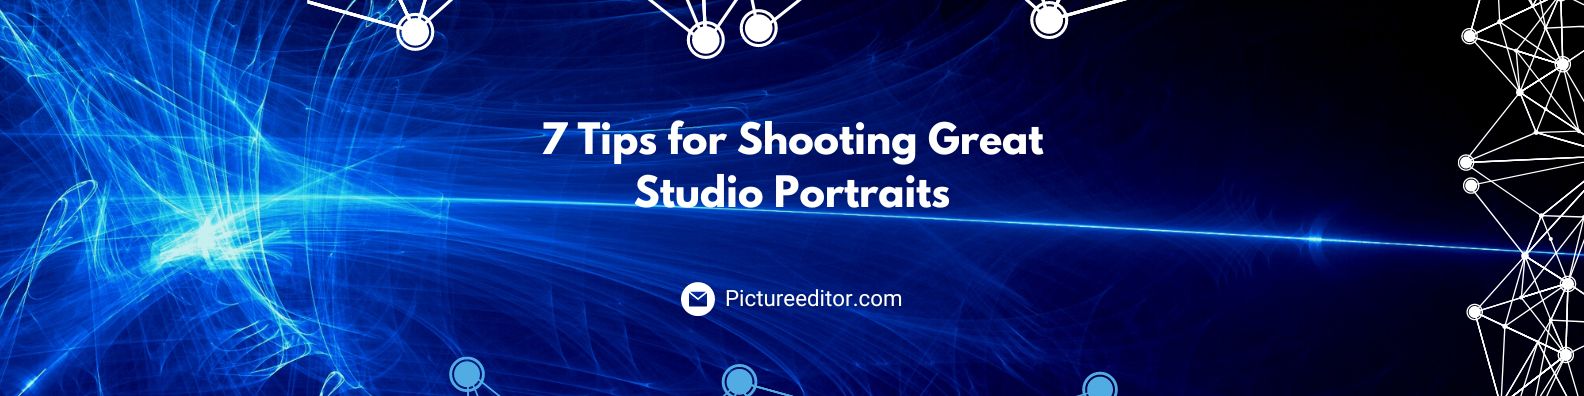 7 Tips for Shooting Great Studio Portraits